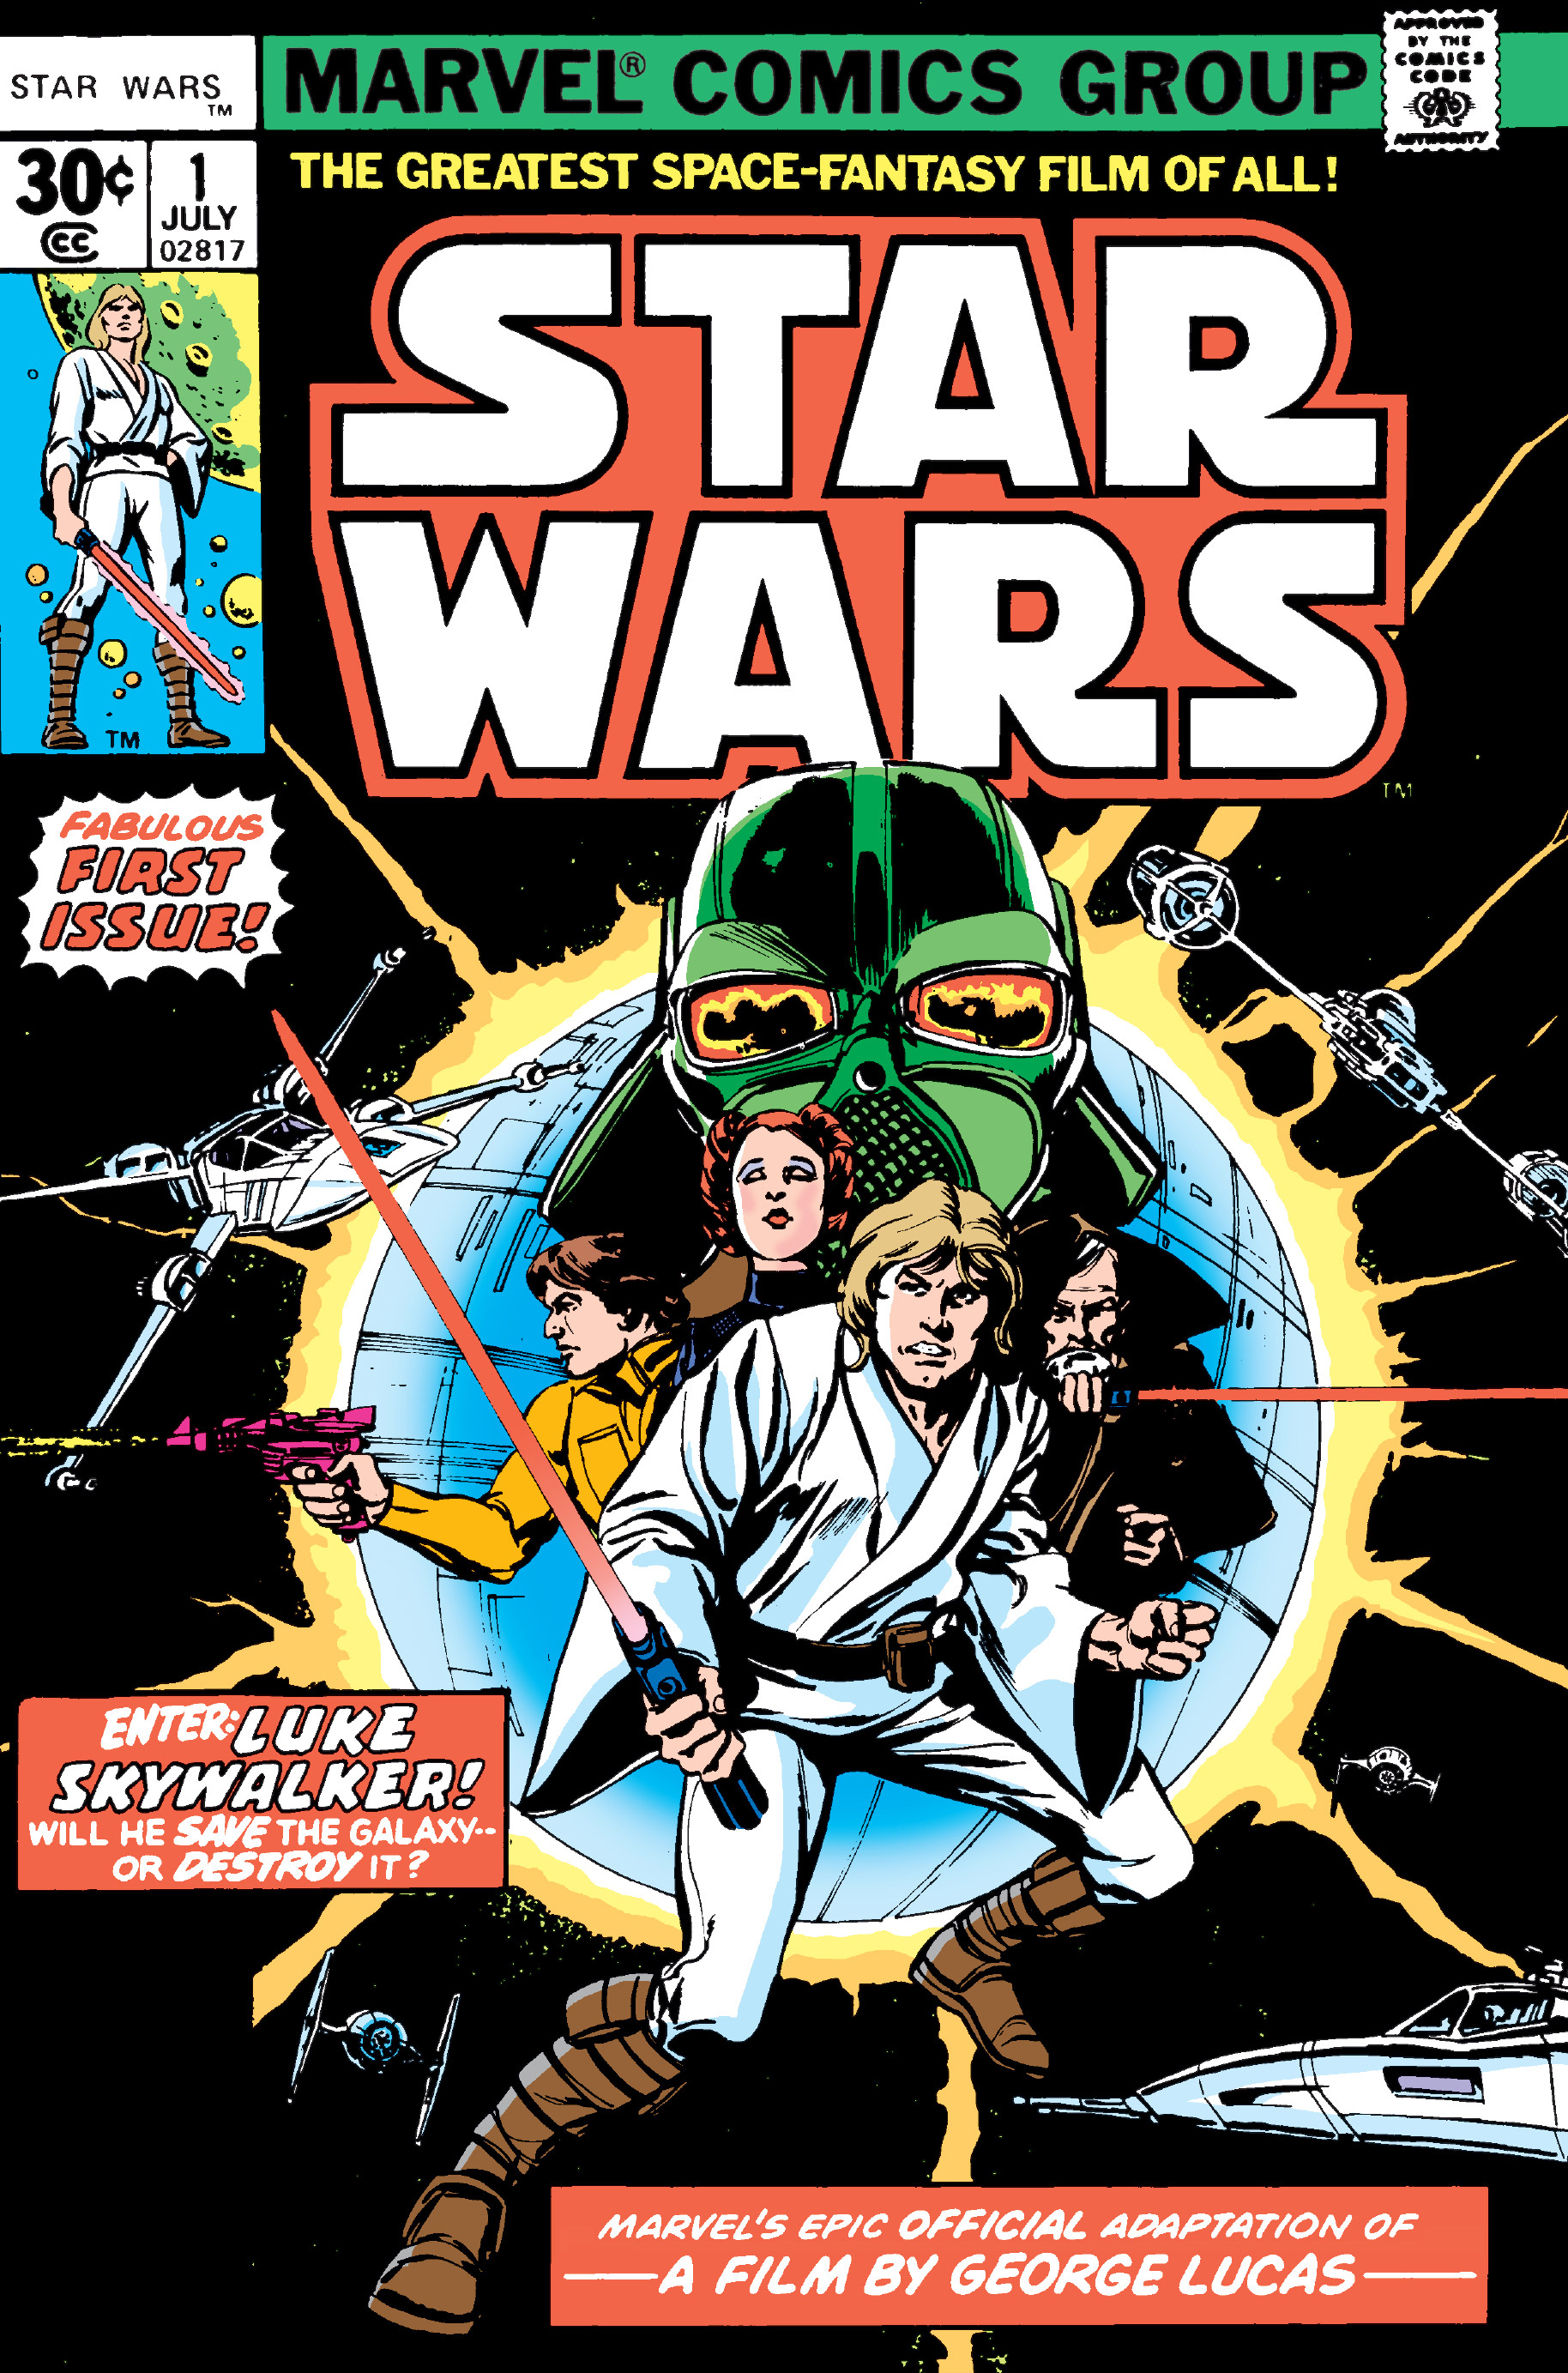 star wars 1977 full movie free online